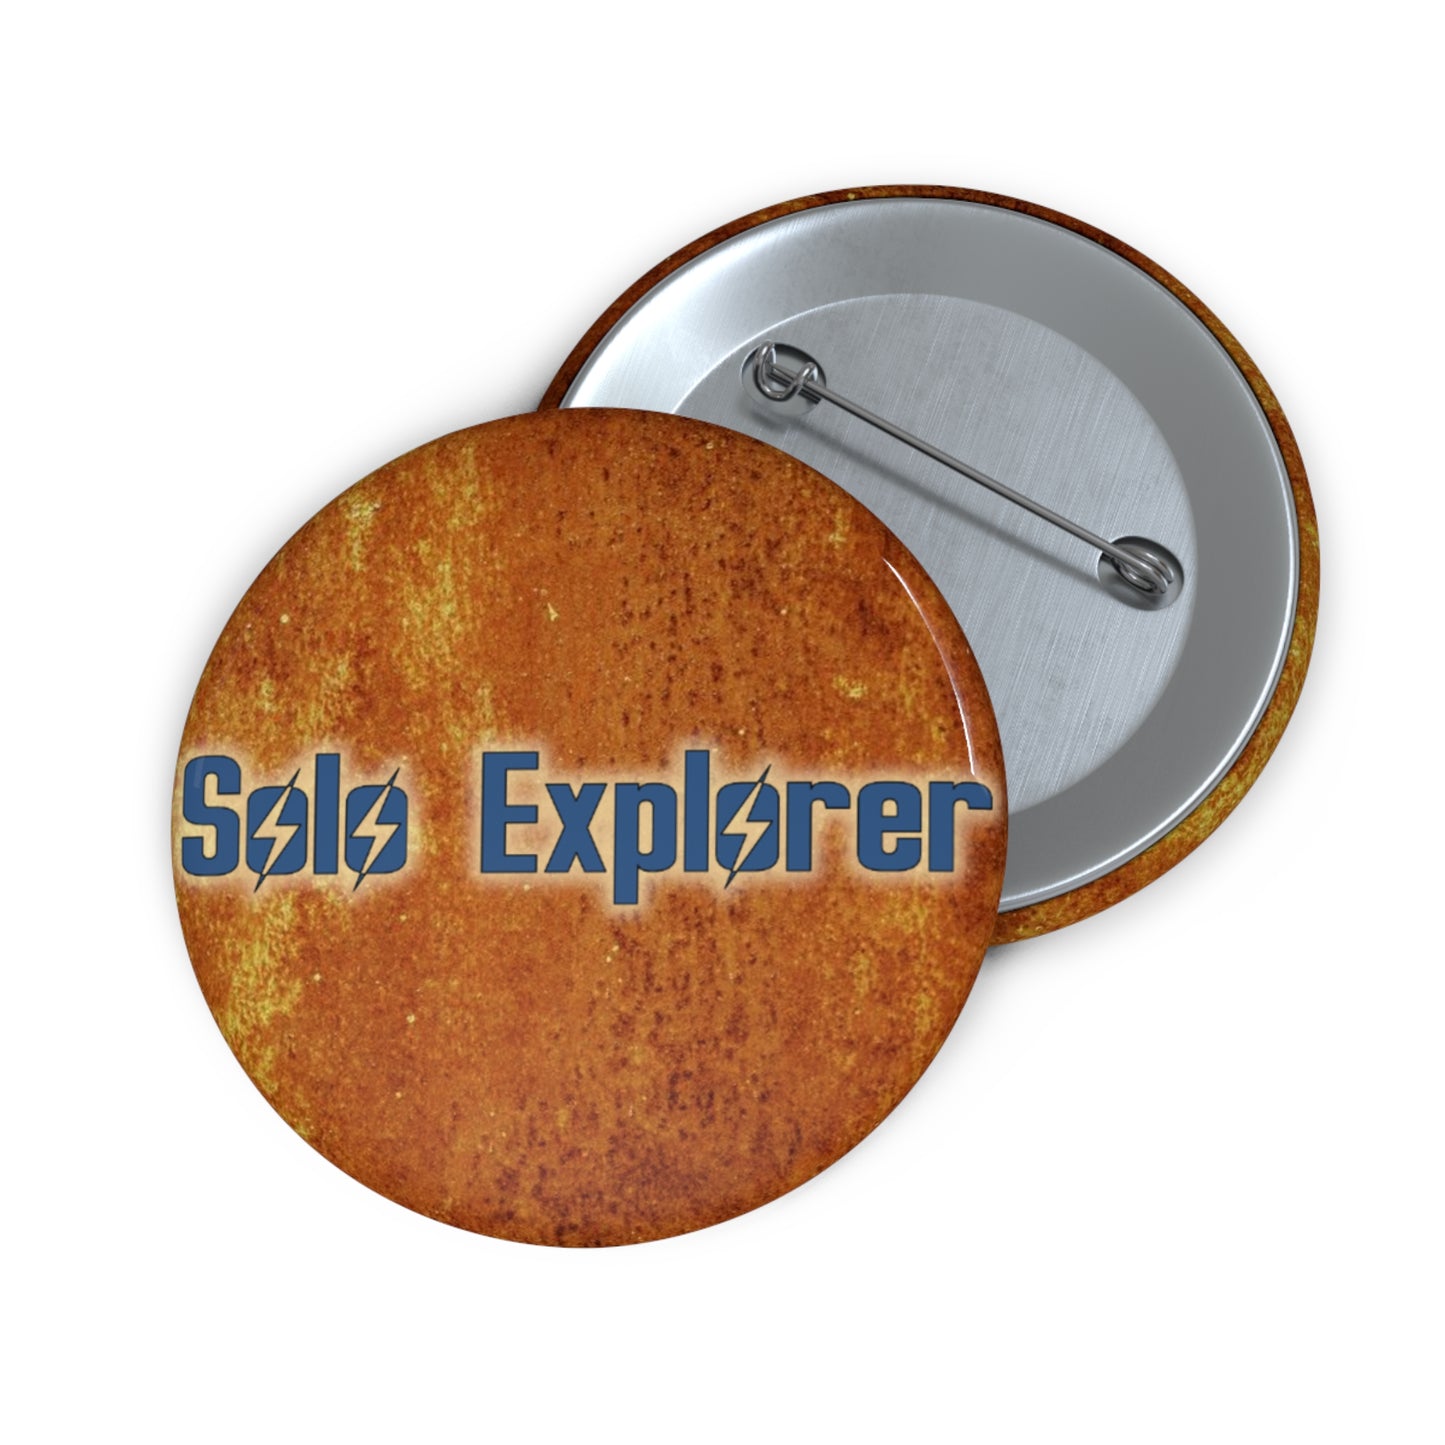 Solo Explorer Pin Buttons